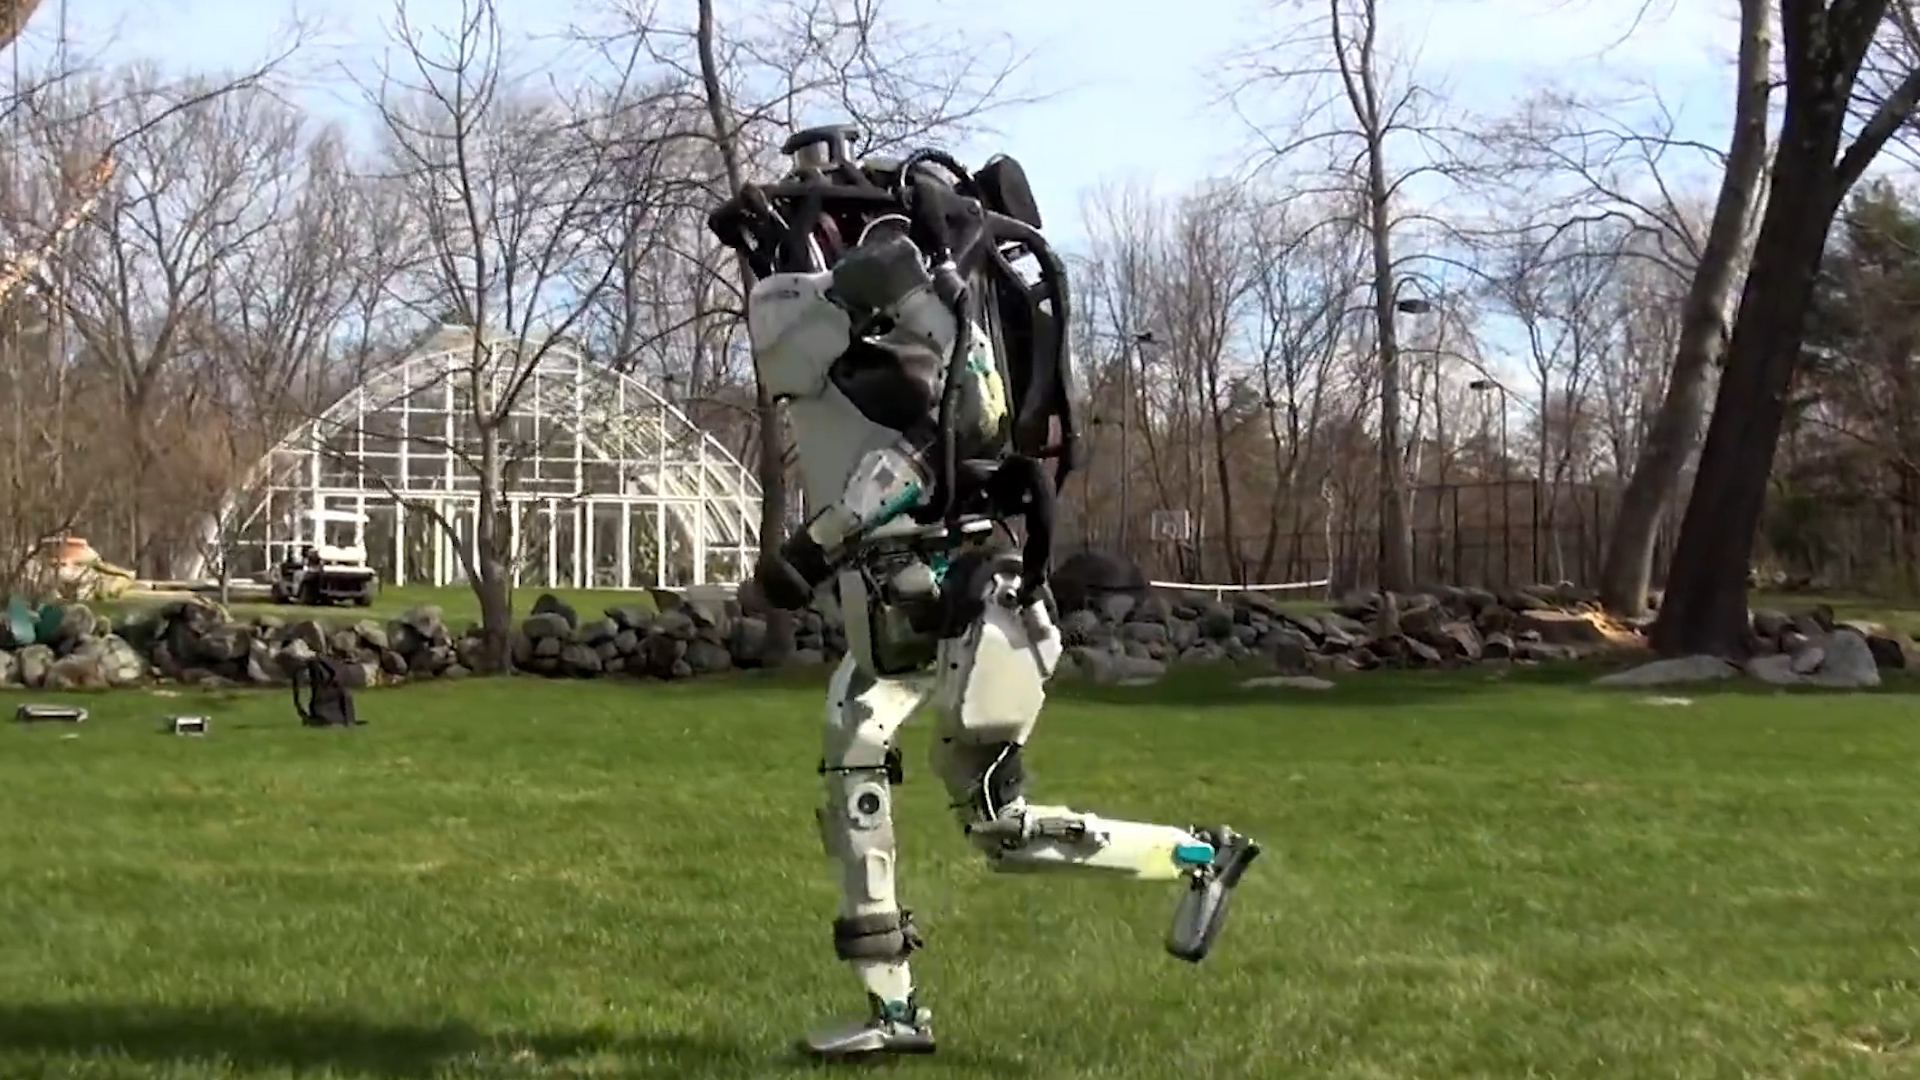 Humanoid robot runs through the park by itself   CNN Video